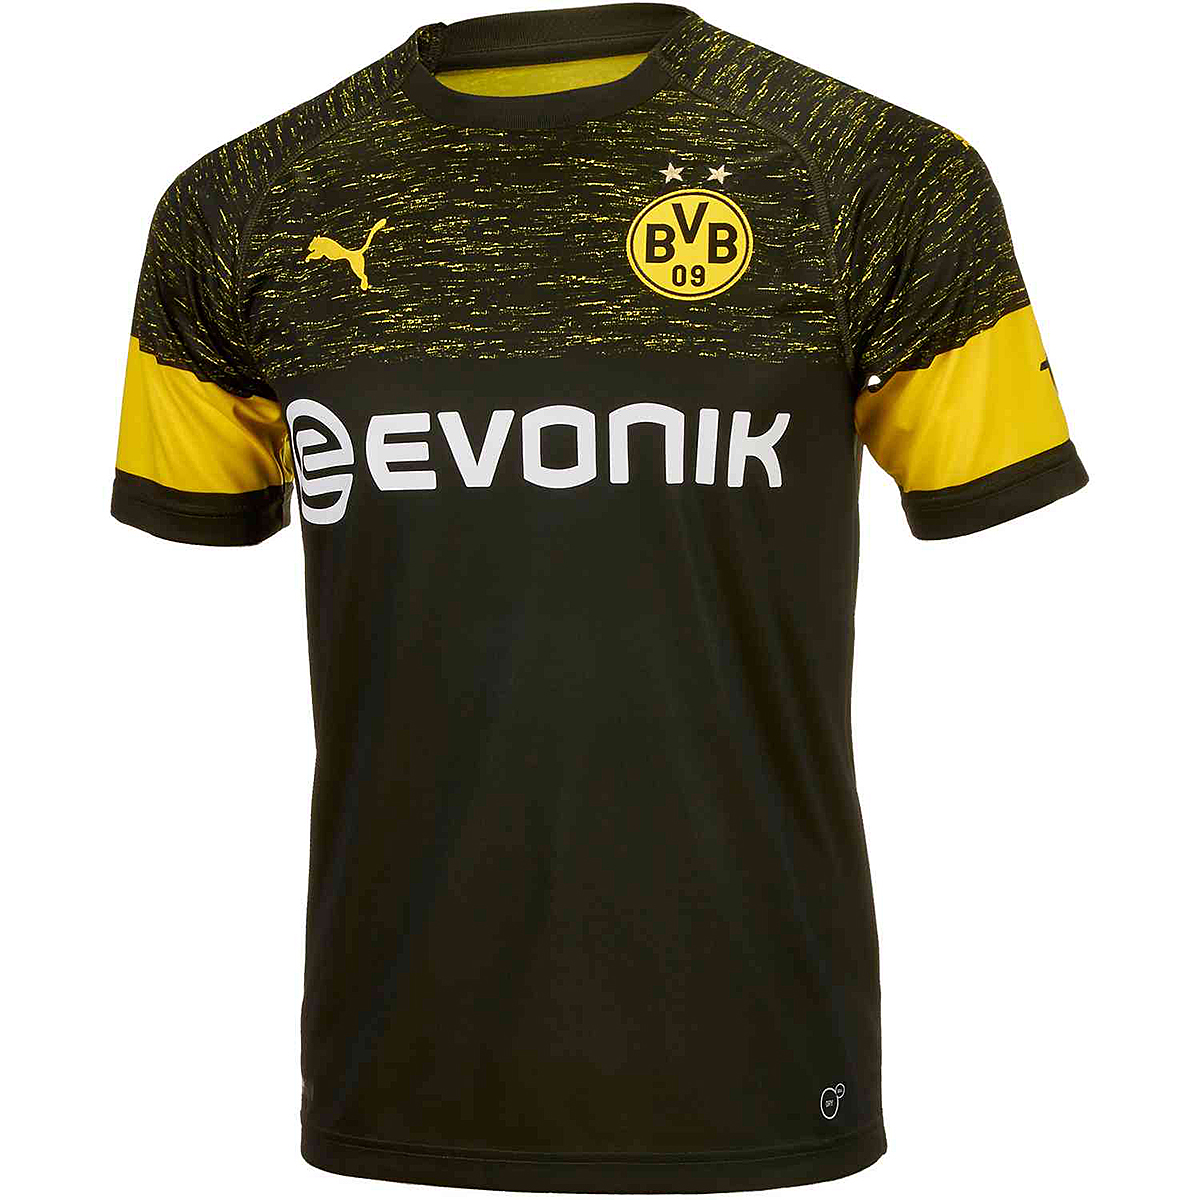 Puma BVB Away Replica Trikot Shirt Herren 2018/2019 753317 02